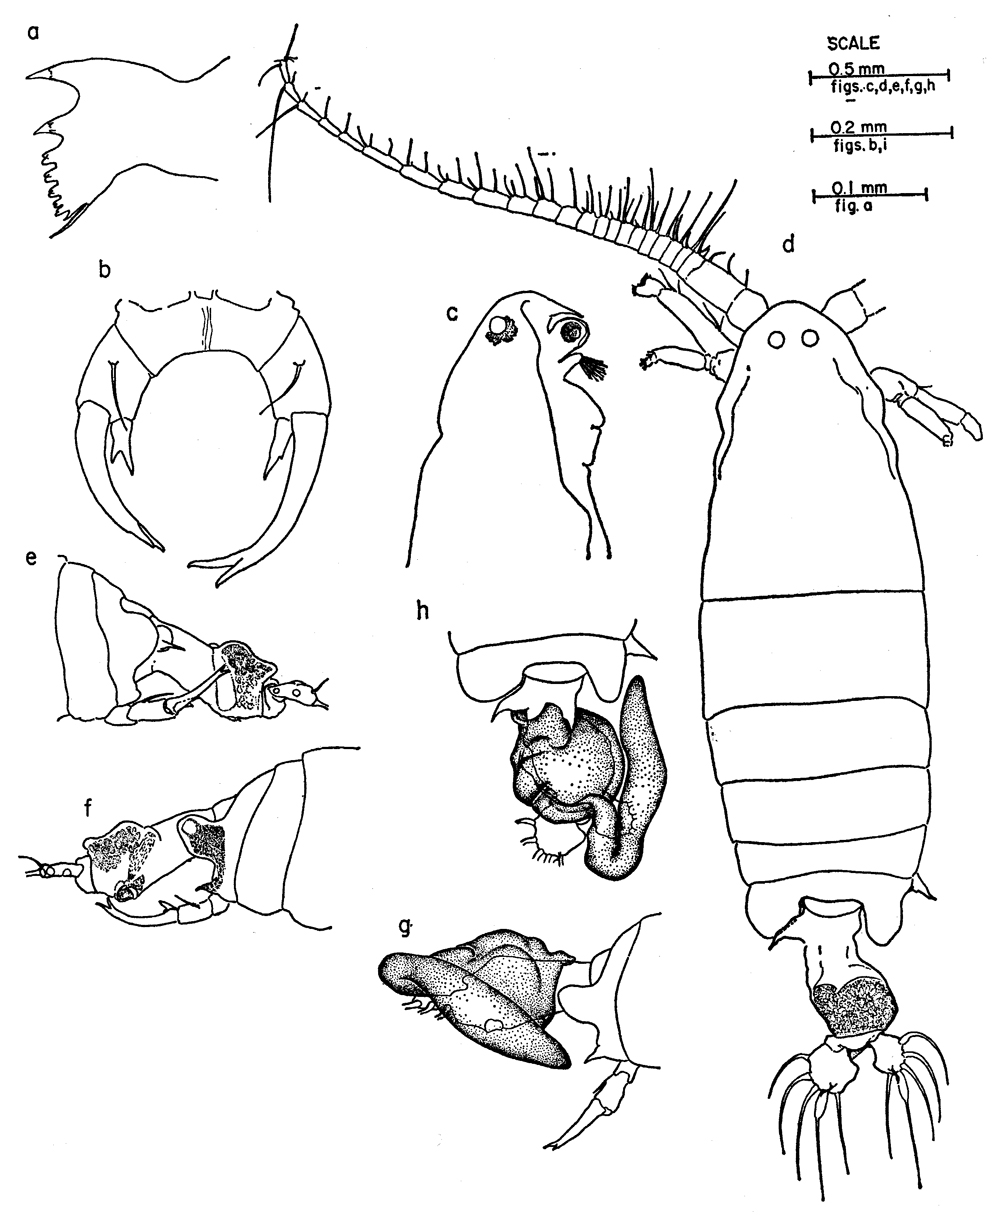 Species Labidocera diandra - Plate 1 of morphological figures